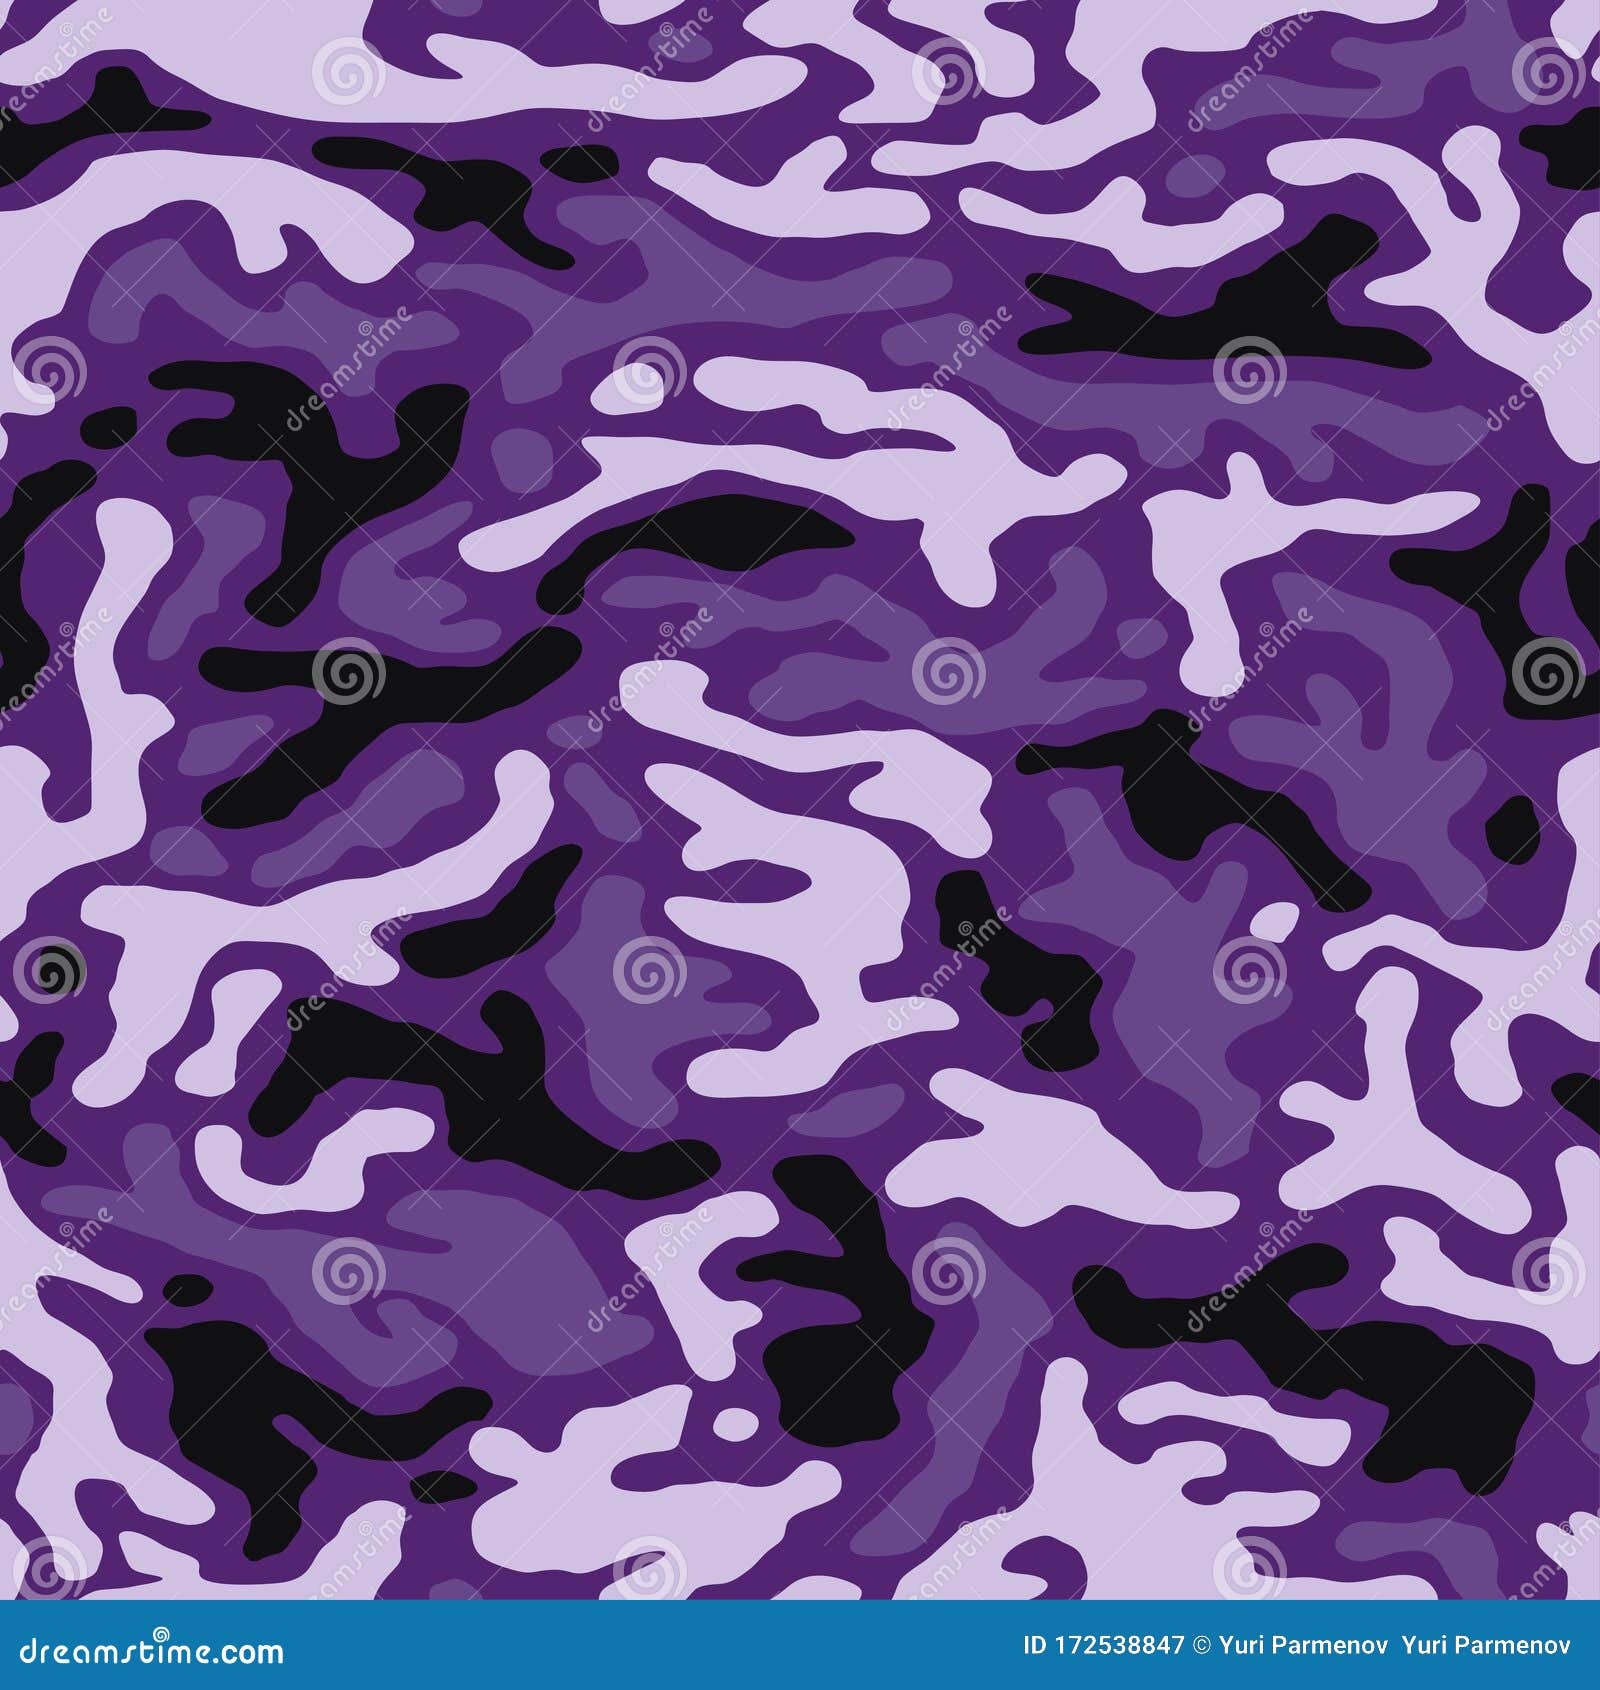 The Purple Camouflage Illustrations Background. | CartoonDealer.com ...